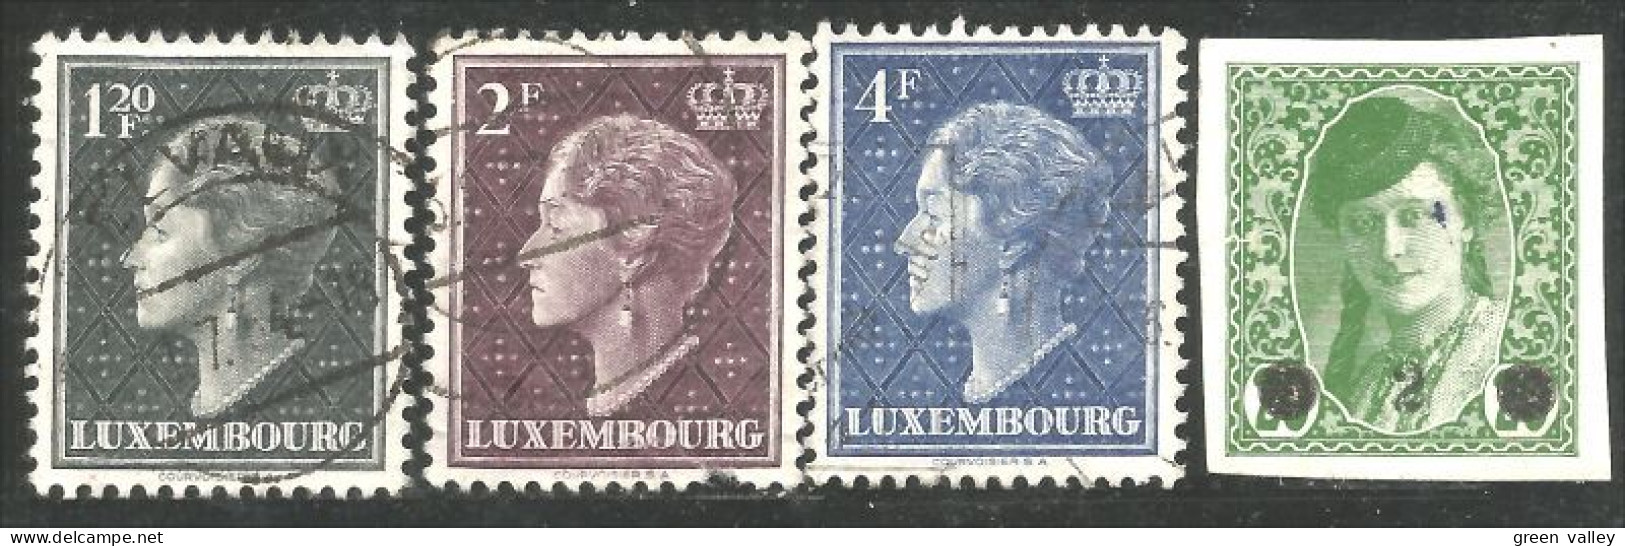 584 Luxembourg 1948 Grande Duchesse Charlotte 1F 20 - 4F (LUX-123) - 1948-58 Charlotte Linksprofil